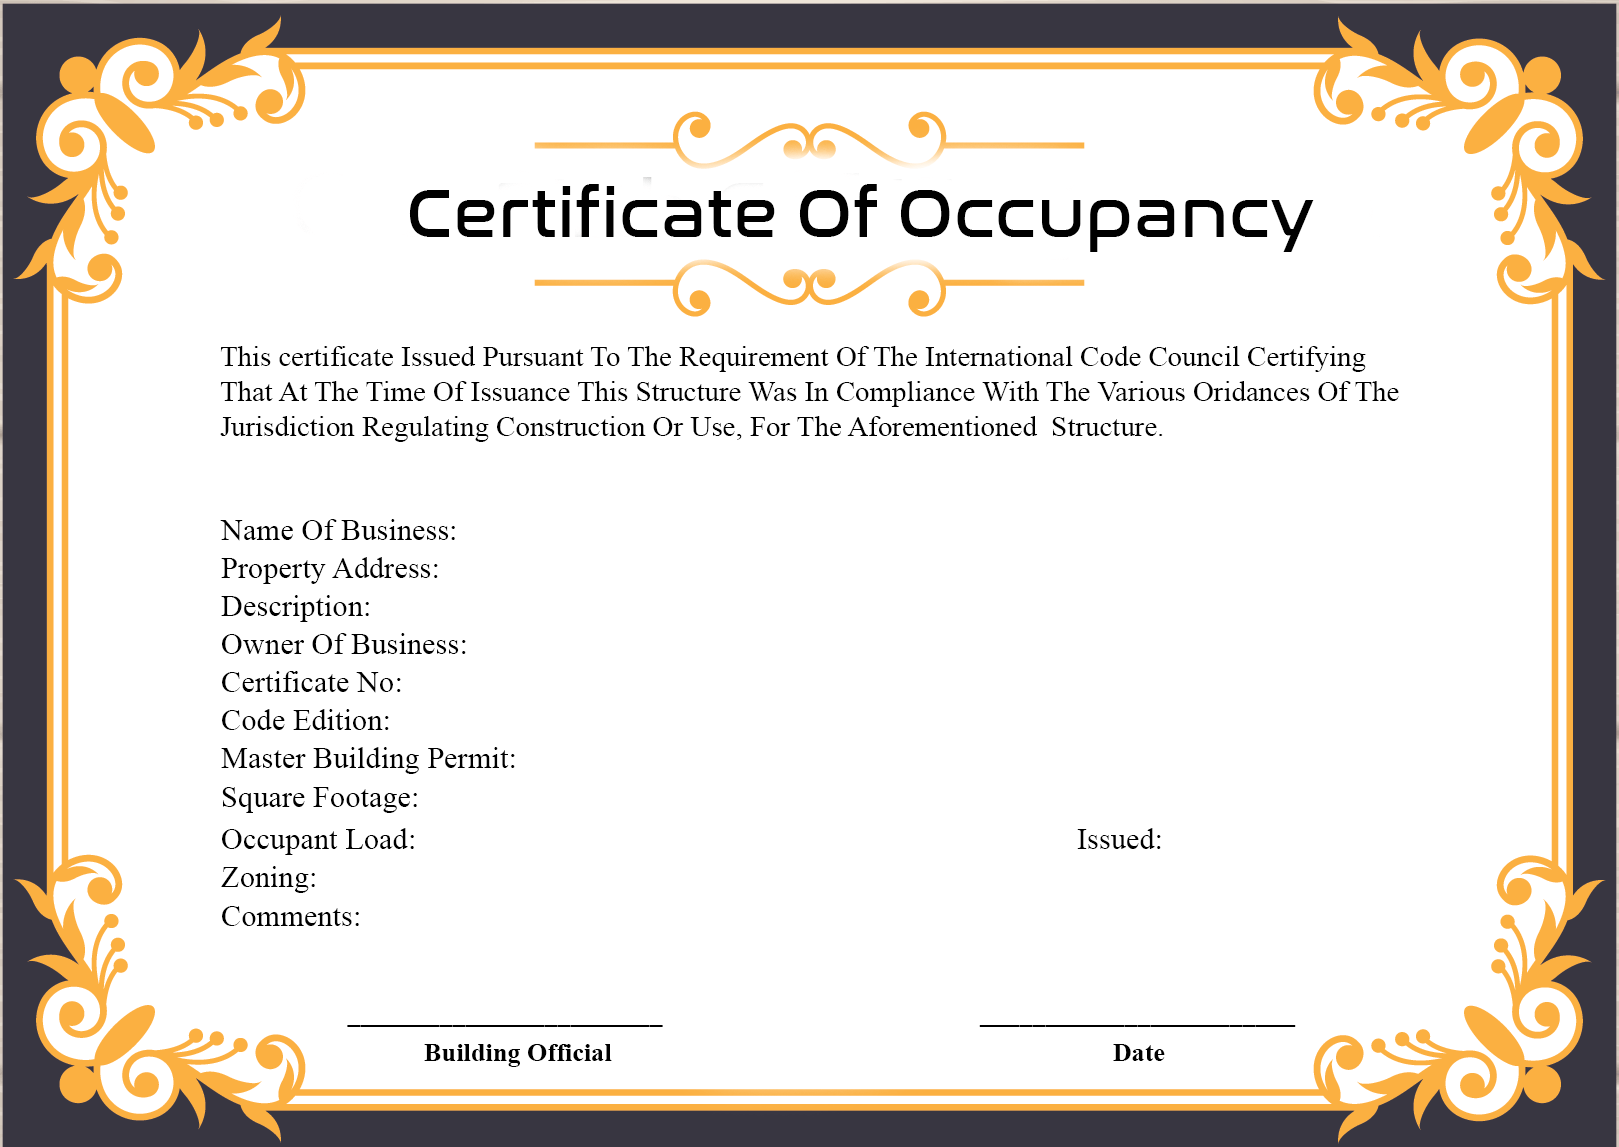 Certificate of Occupancy 